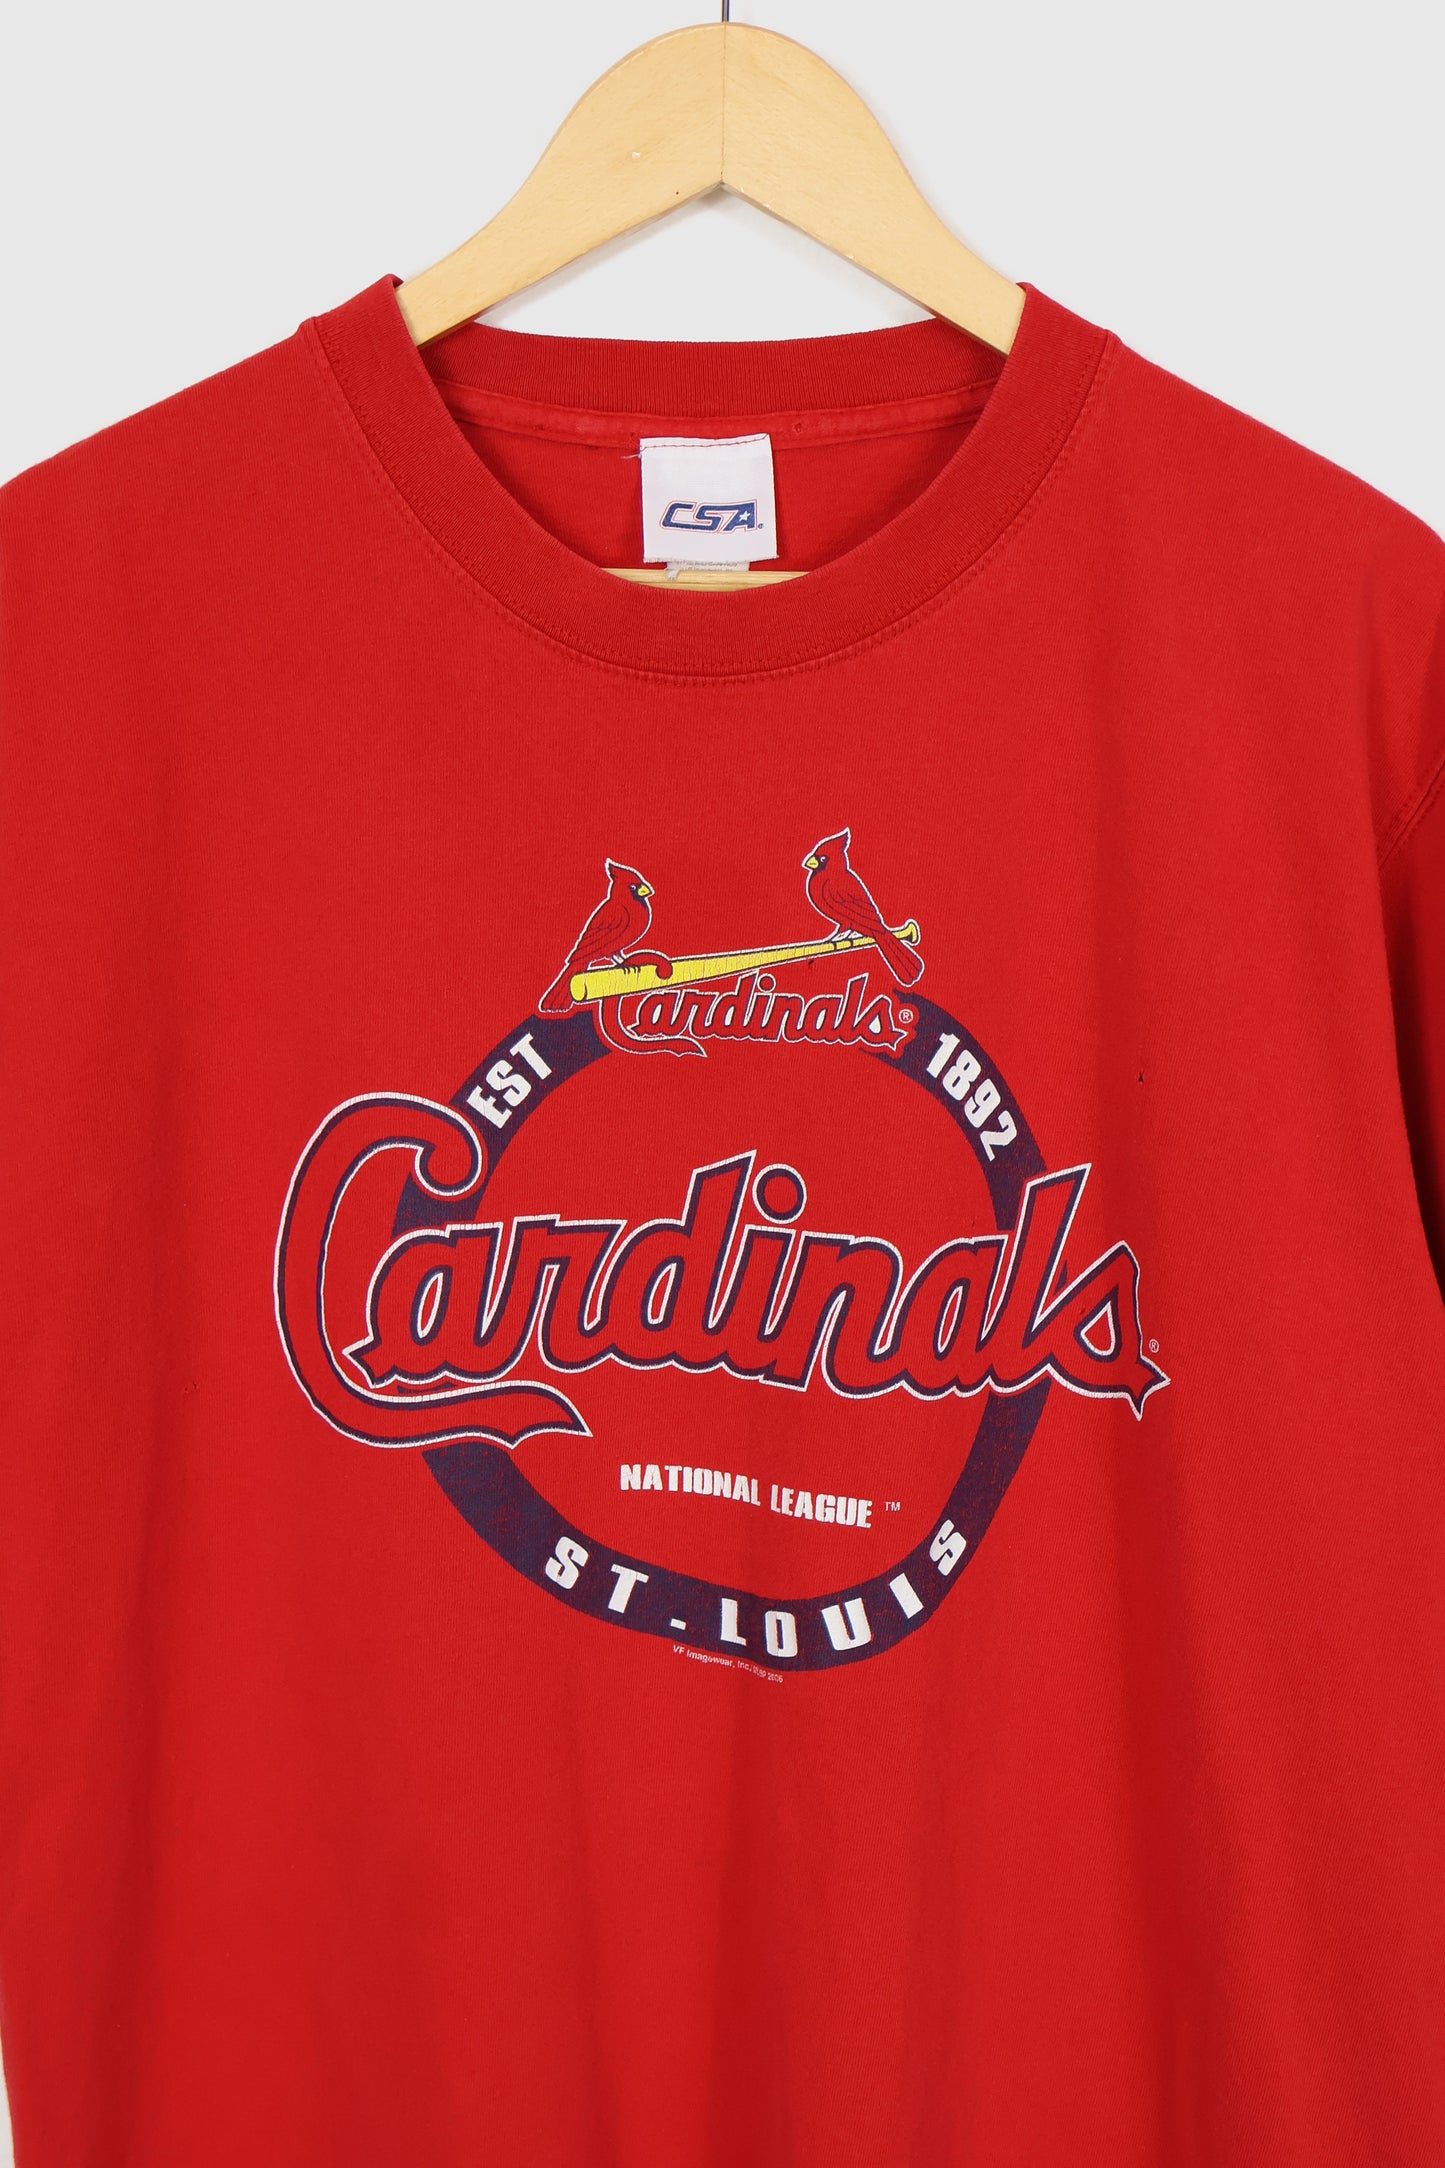 Vintage St. Louis Cardinals Tee